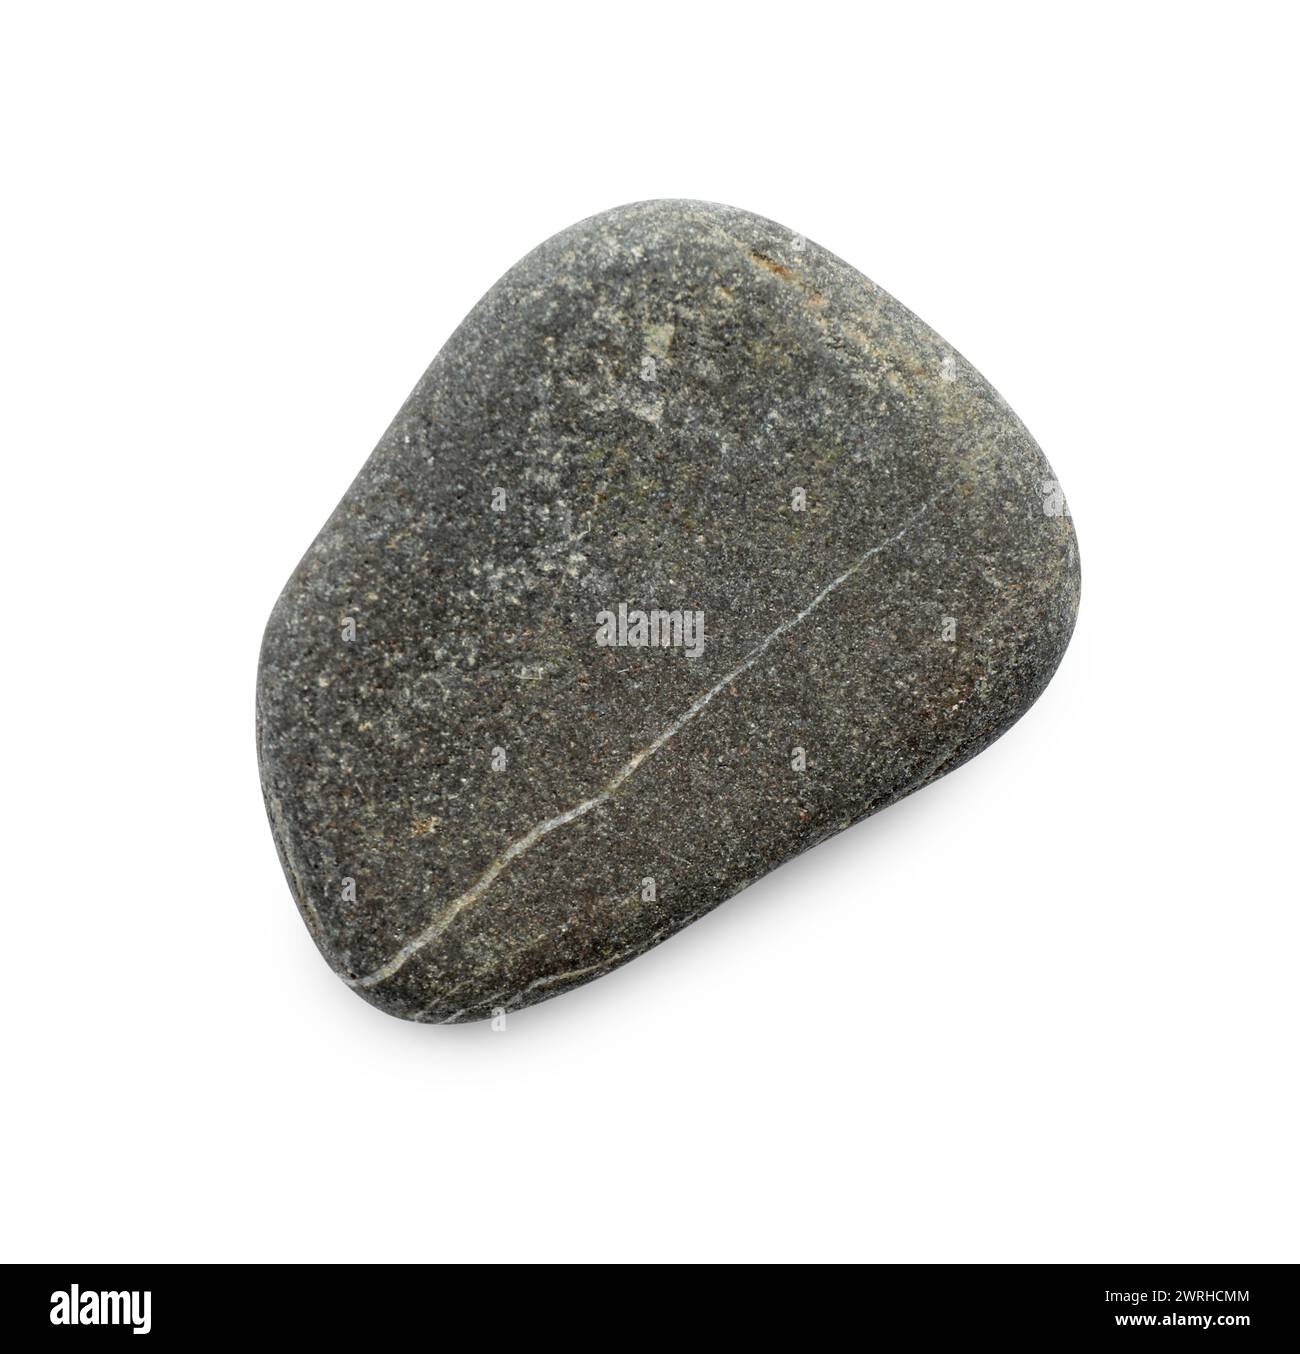 One dark grey stone isolated on white, top view Stock Photo